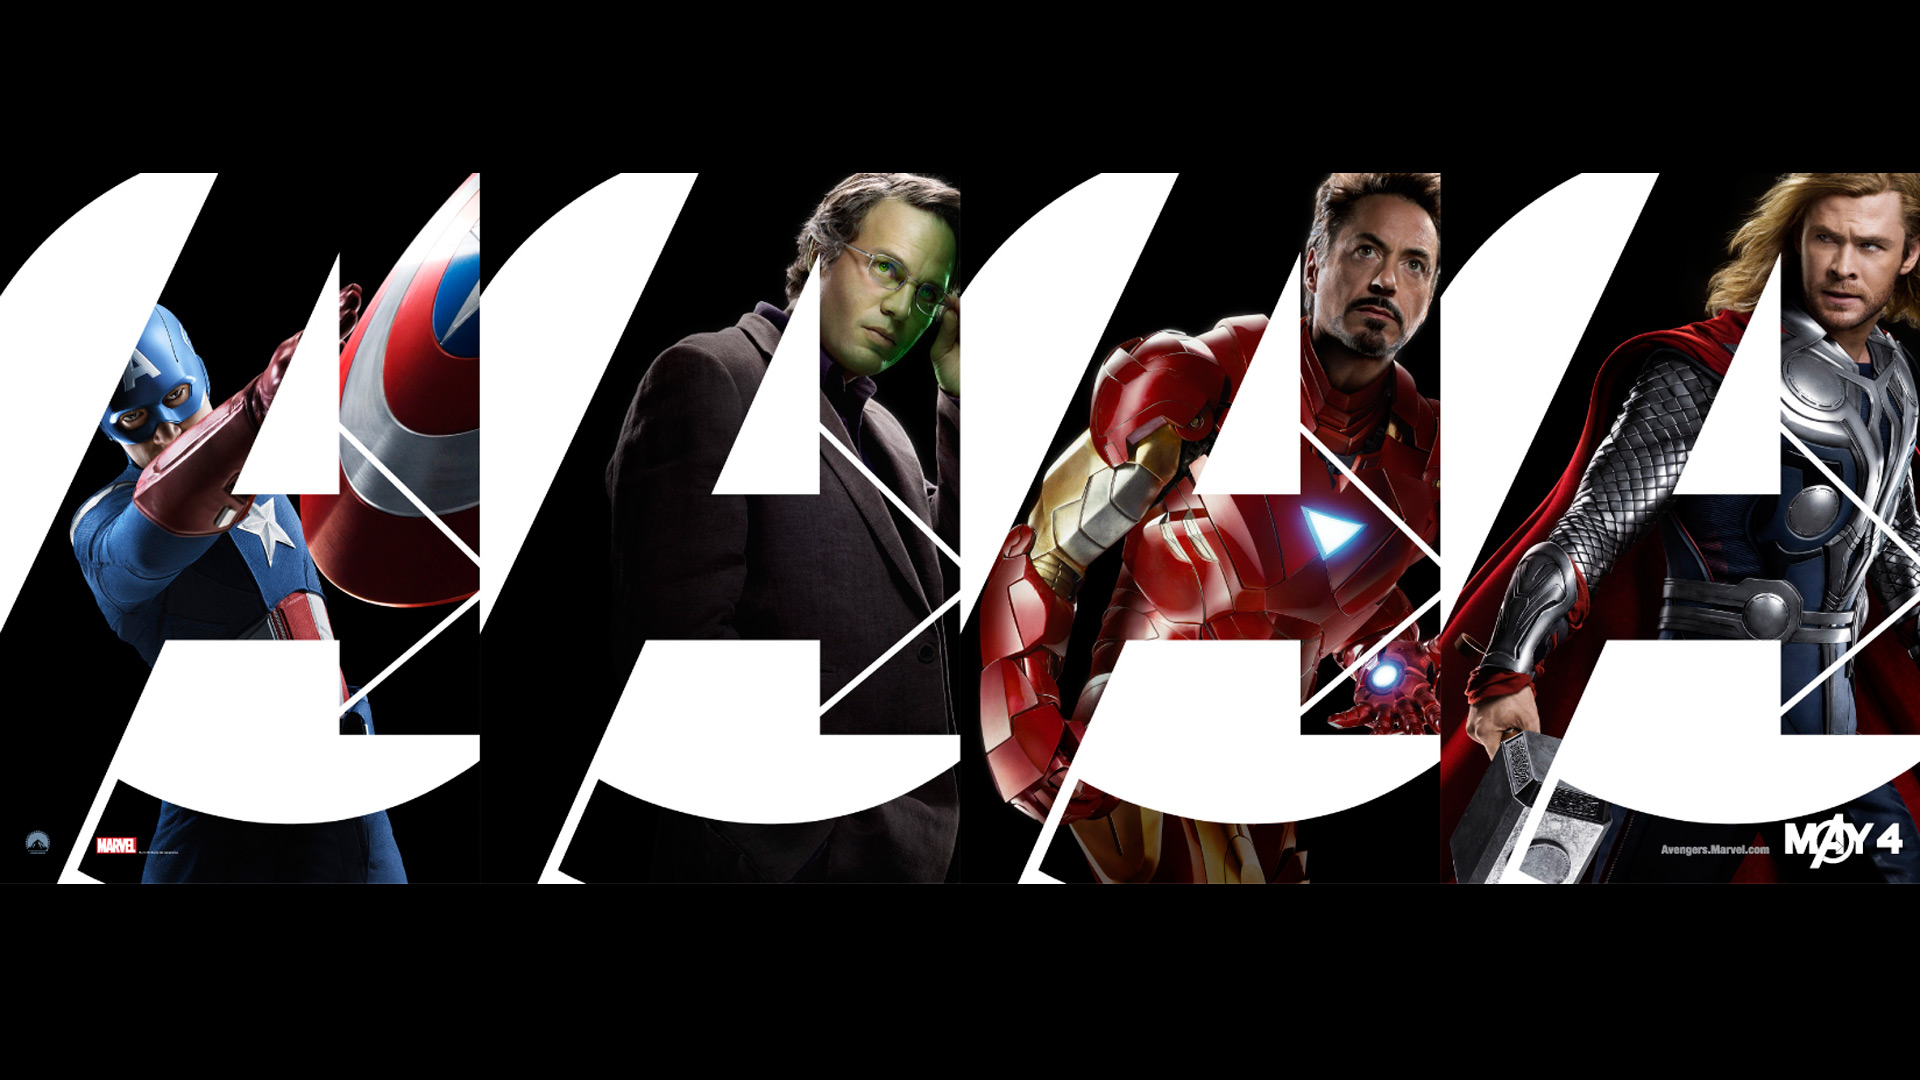 Super Heroes In Avengers - Chris Hemsworth Chris Evans Robert Downey Jr Mark Ruffalo - HD Wallpaper 